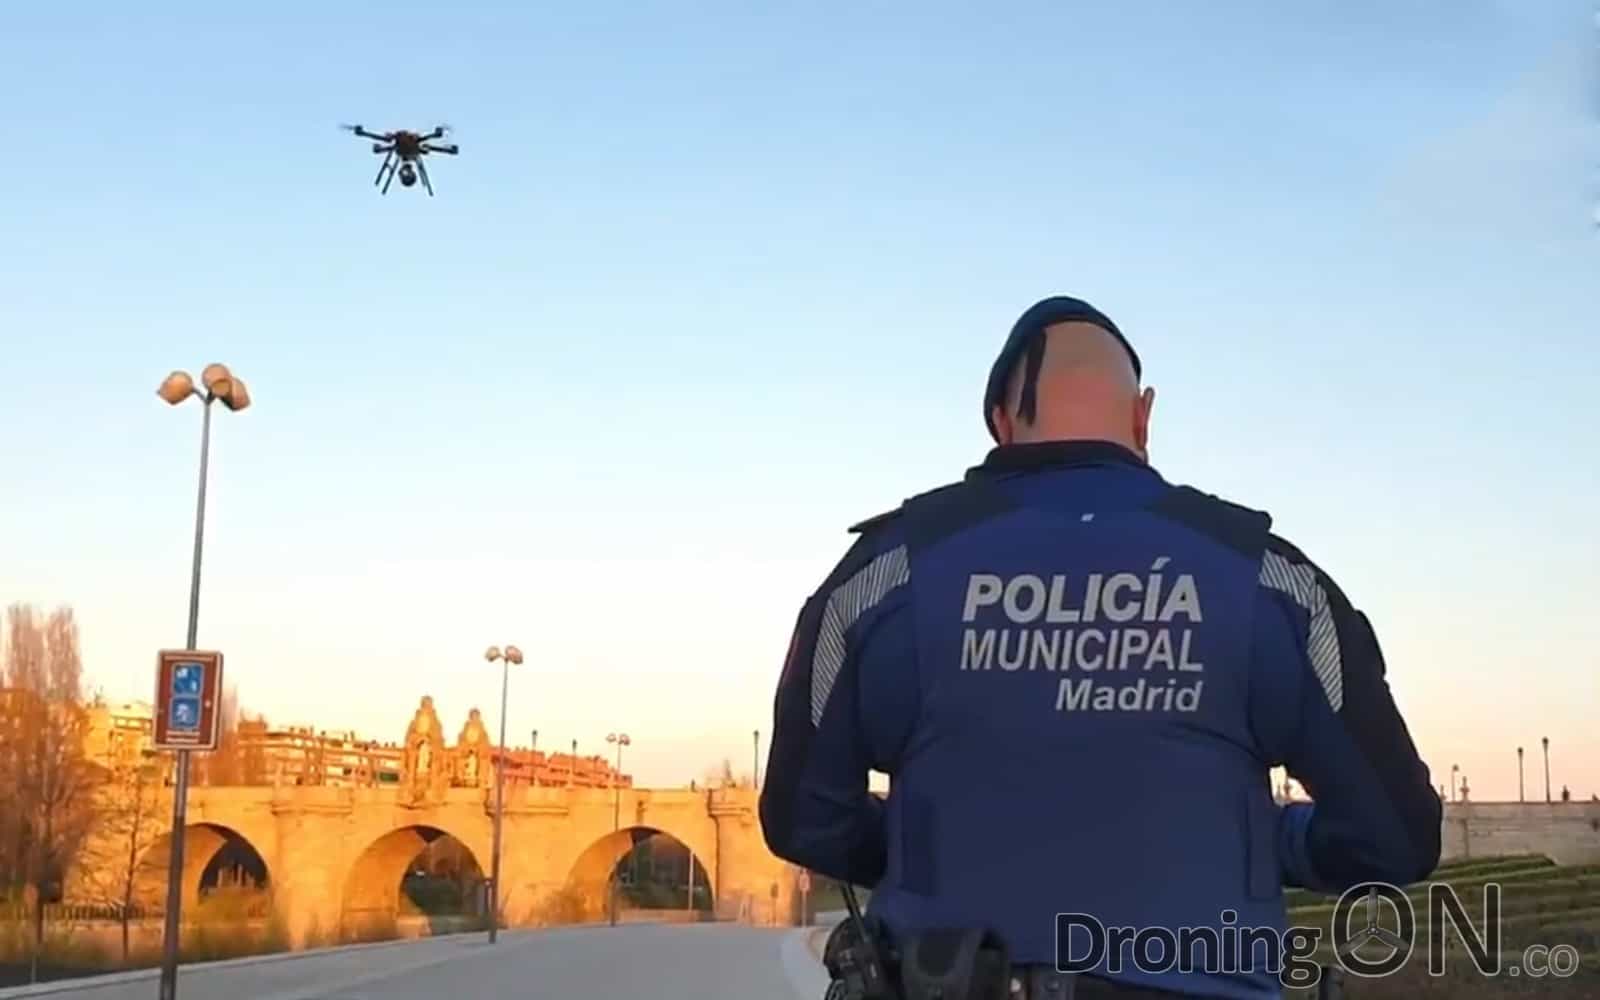 Spanish Police (Policia Municipal) use drones in Madrid to warn public of Coronavirus Covid-19 quarantine risk